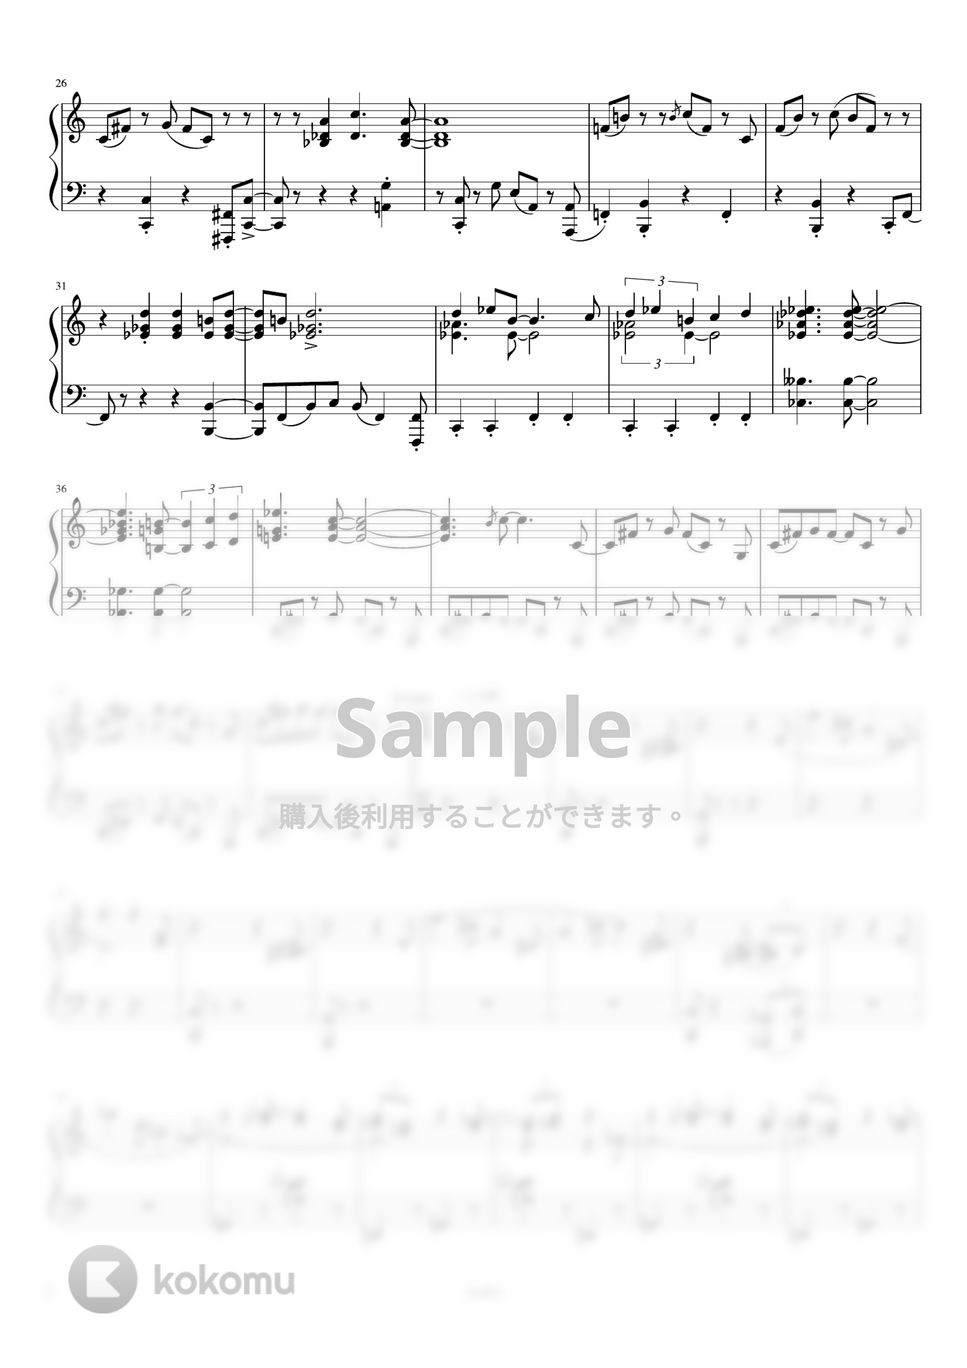 West Side Story - West Side Story Medley (ウエストサイドストーリーピアノ/映画音楽ピアノ) by AsukA818